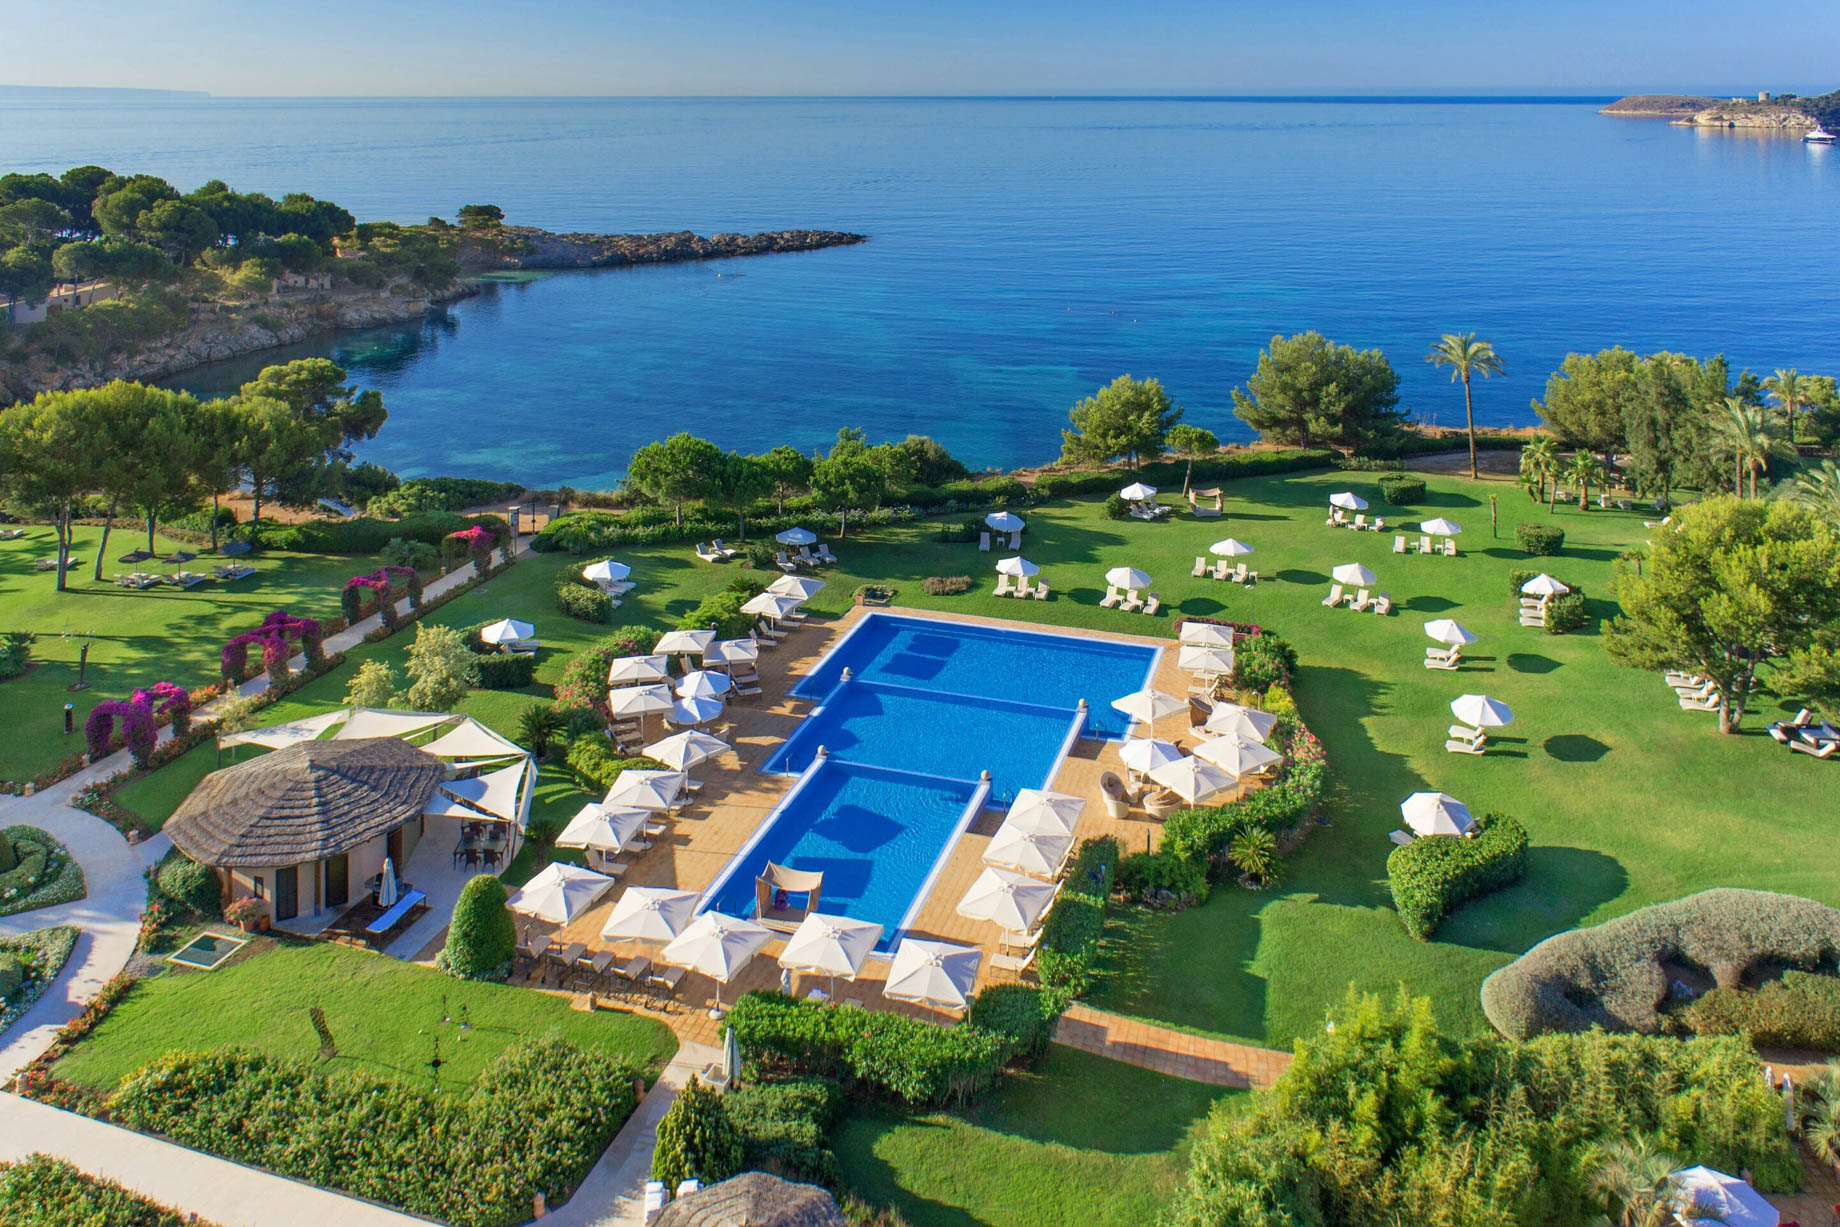 The St. Regis Mardavall Mallorca Resort - Palma de Mallorca, Spain - Resort Pool Aerial View